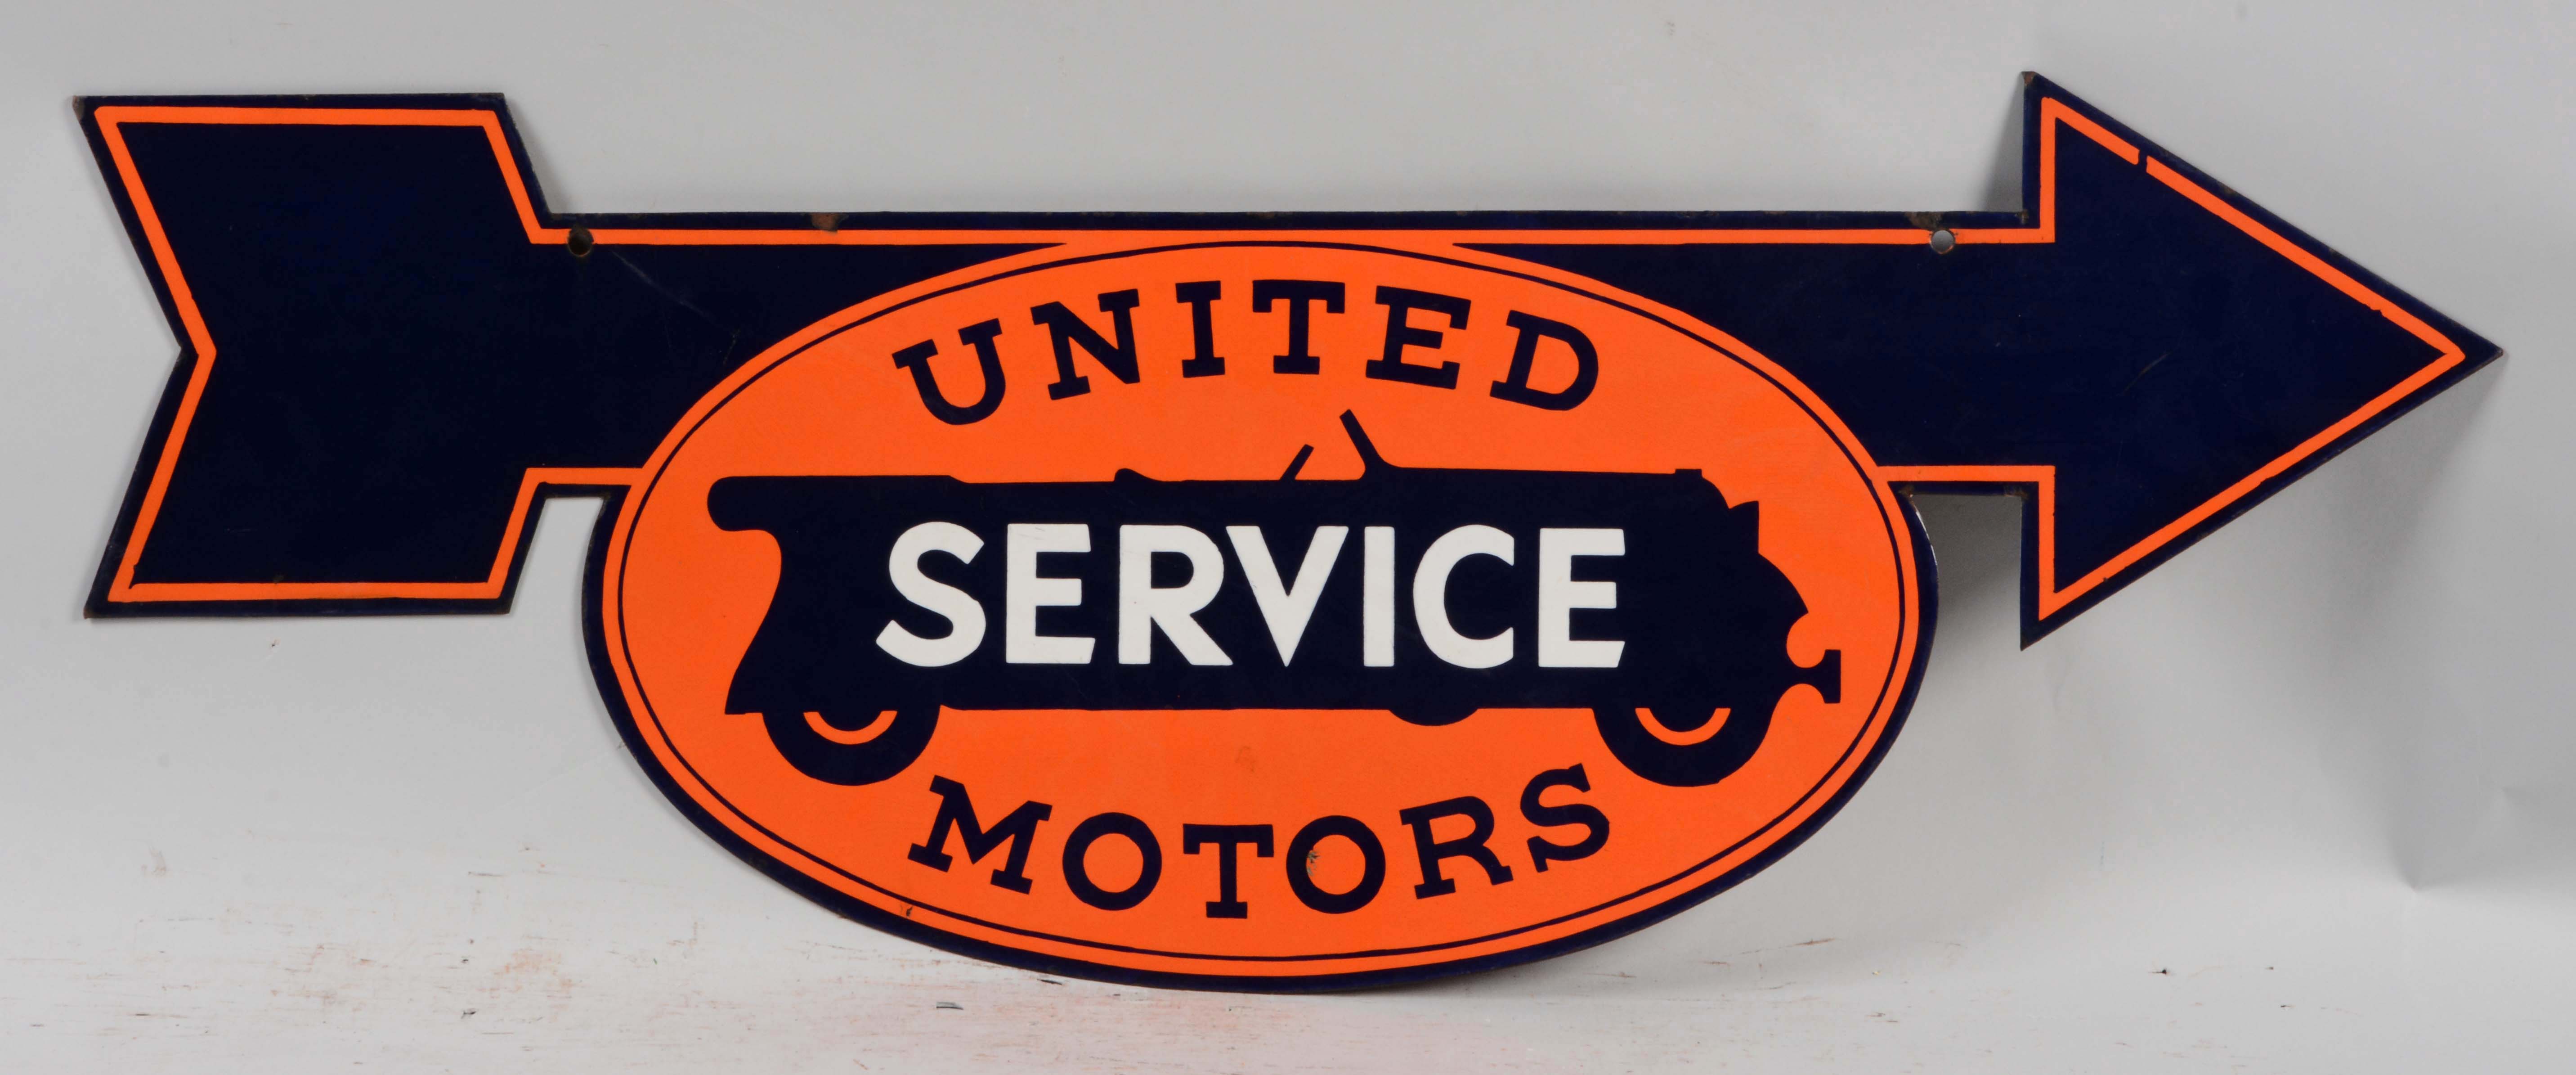 United Motors Service Diecut Porcelain Arrow Sign, estimated at $5,000-8,000.